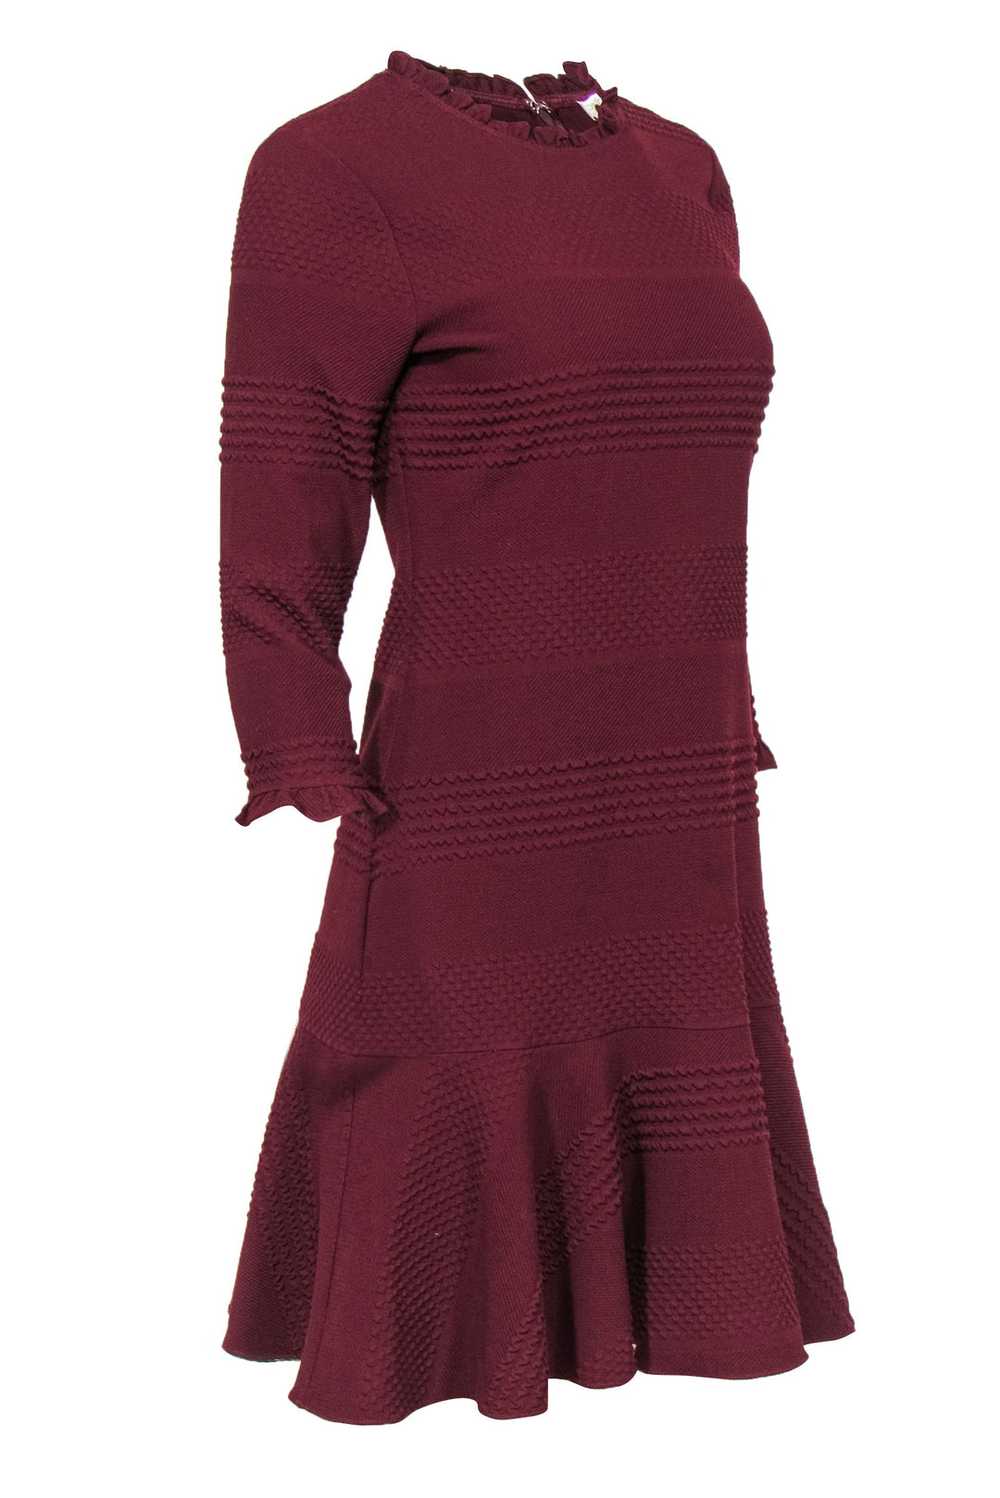 Shoshanna - Maroon Textured Ruffled Sheath Dress … - image 2